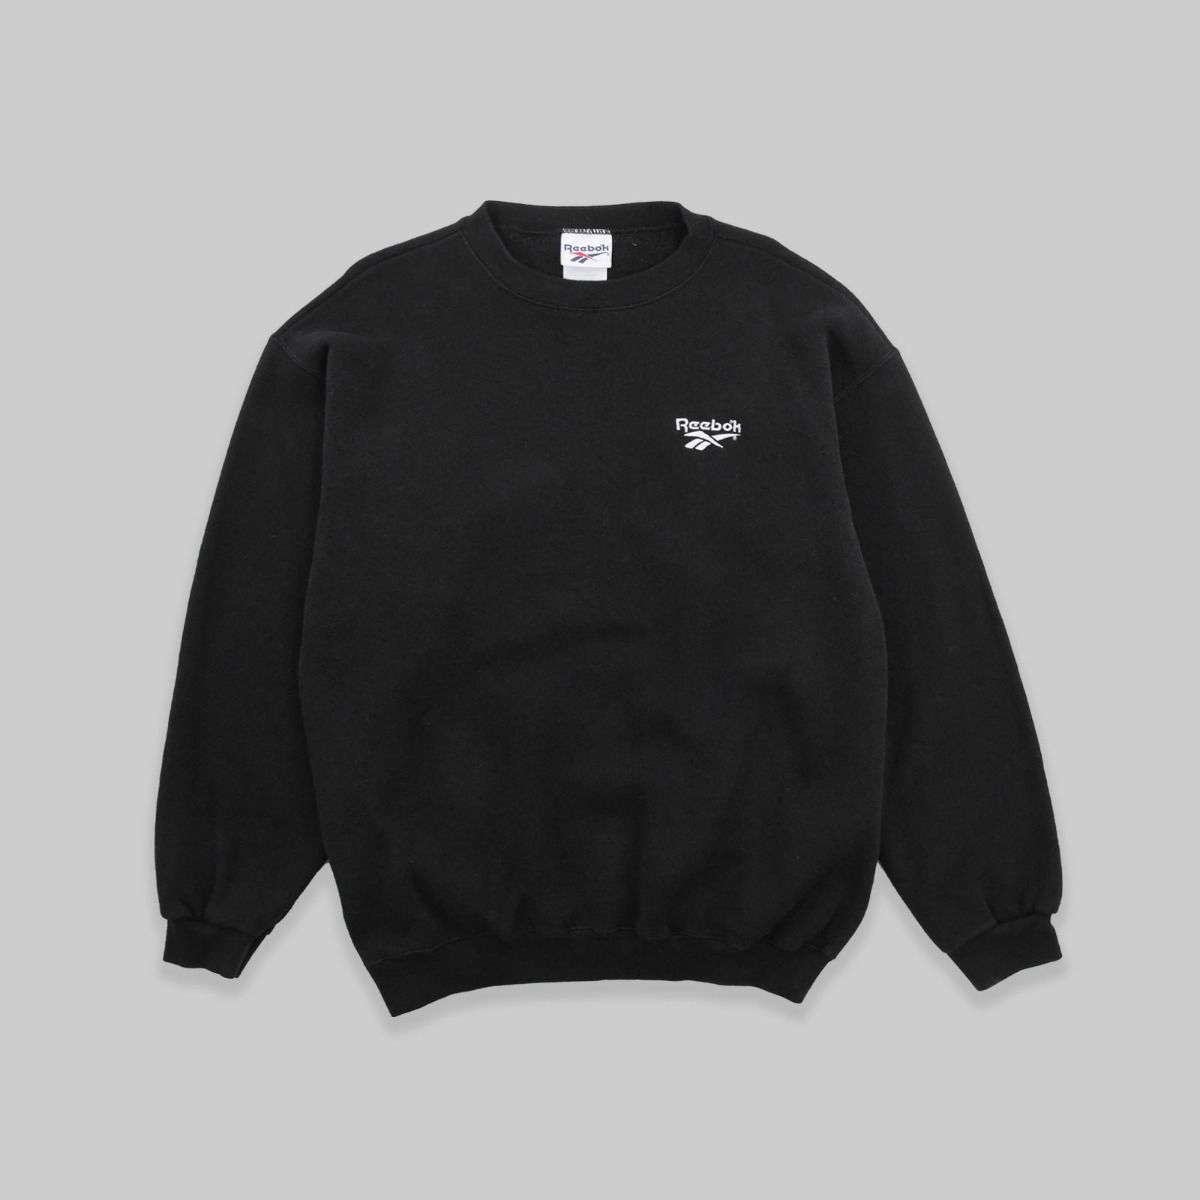 Reebok 1990s Sweatshirt